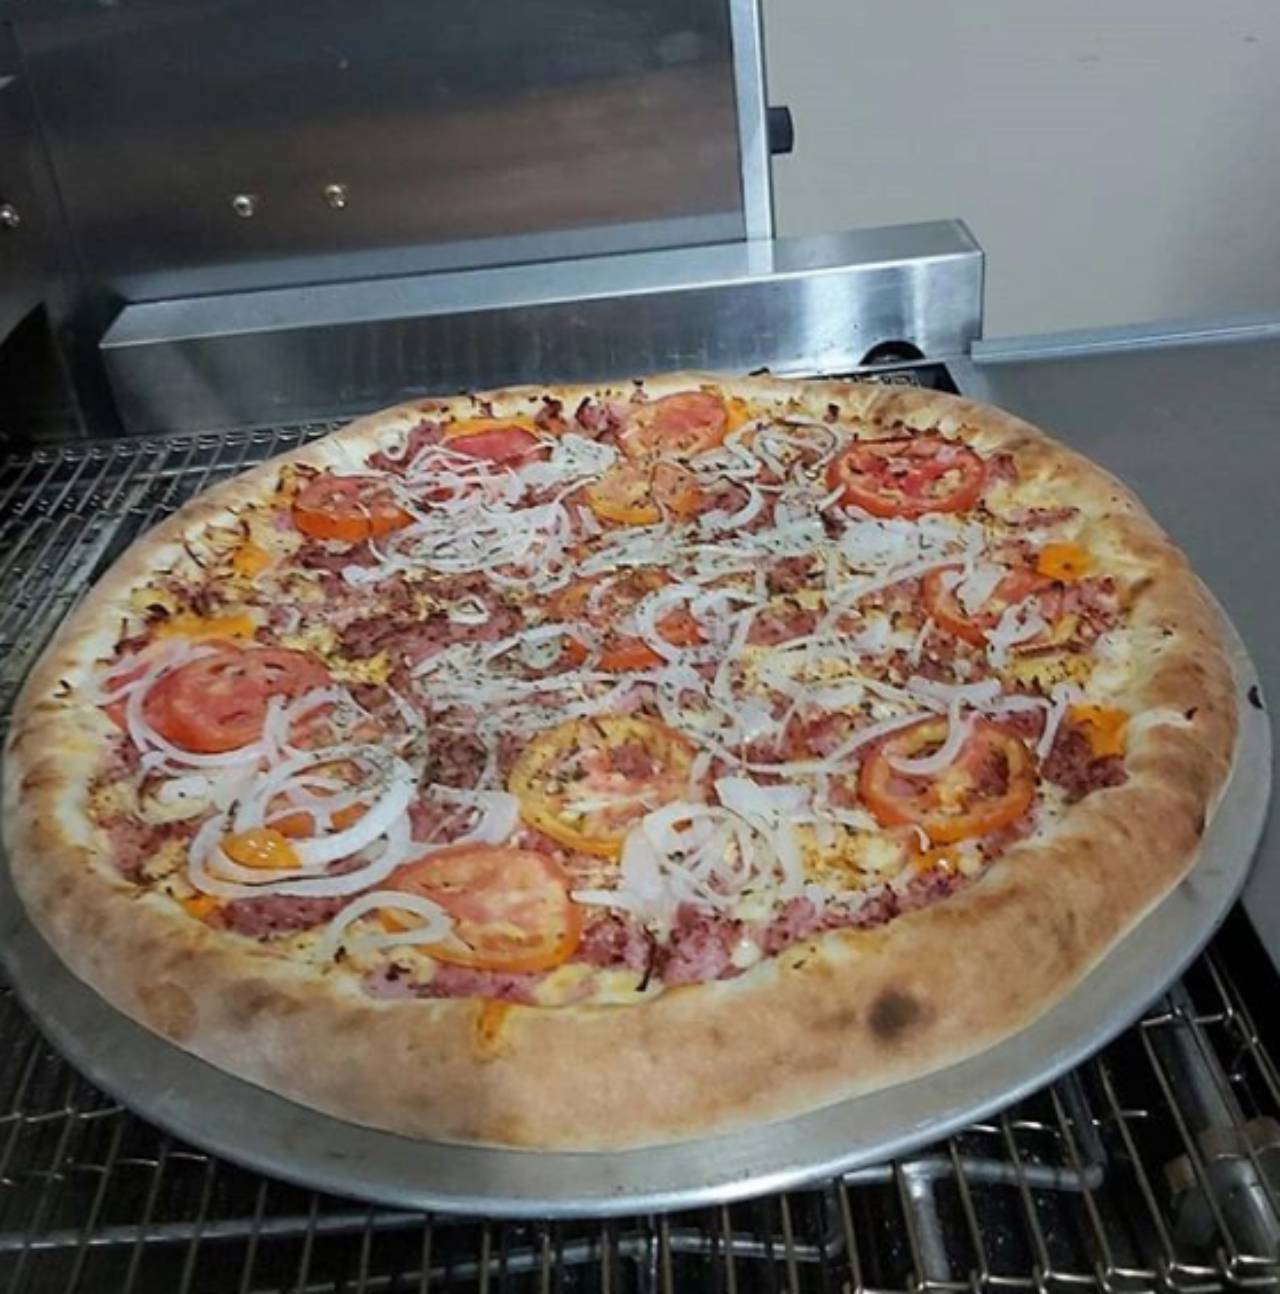 Pizza em Casa